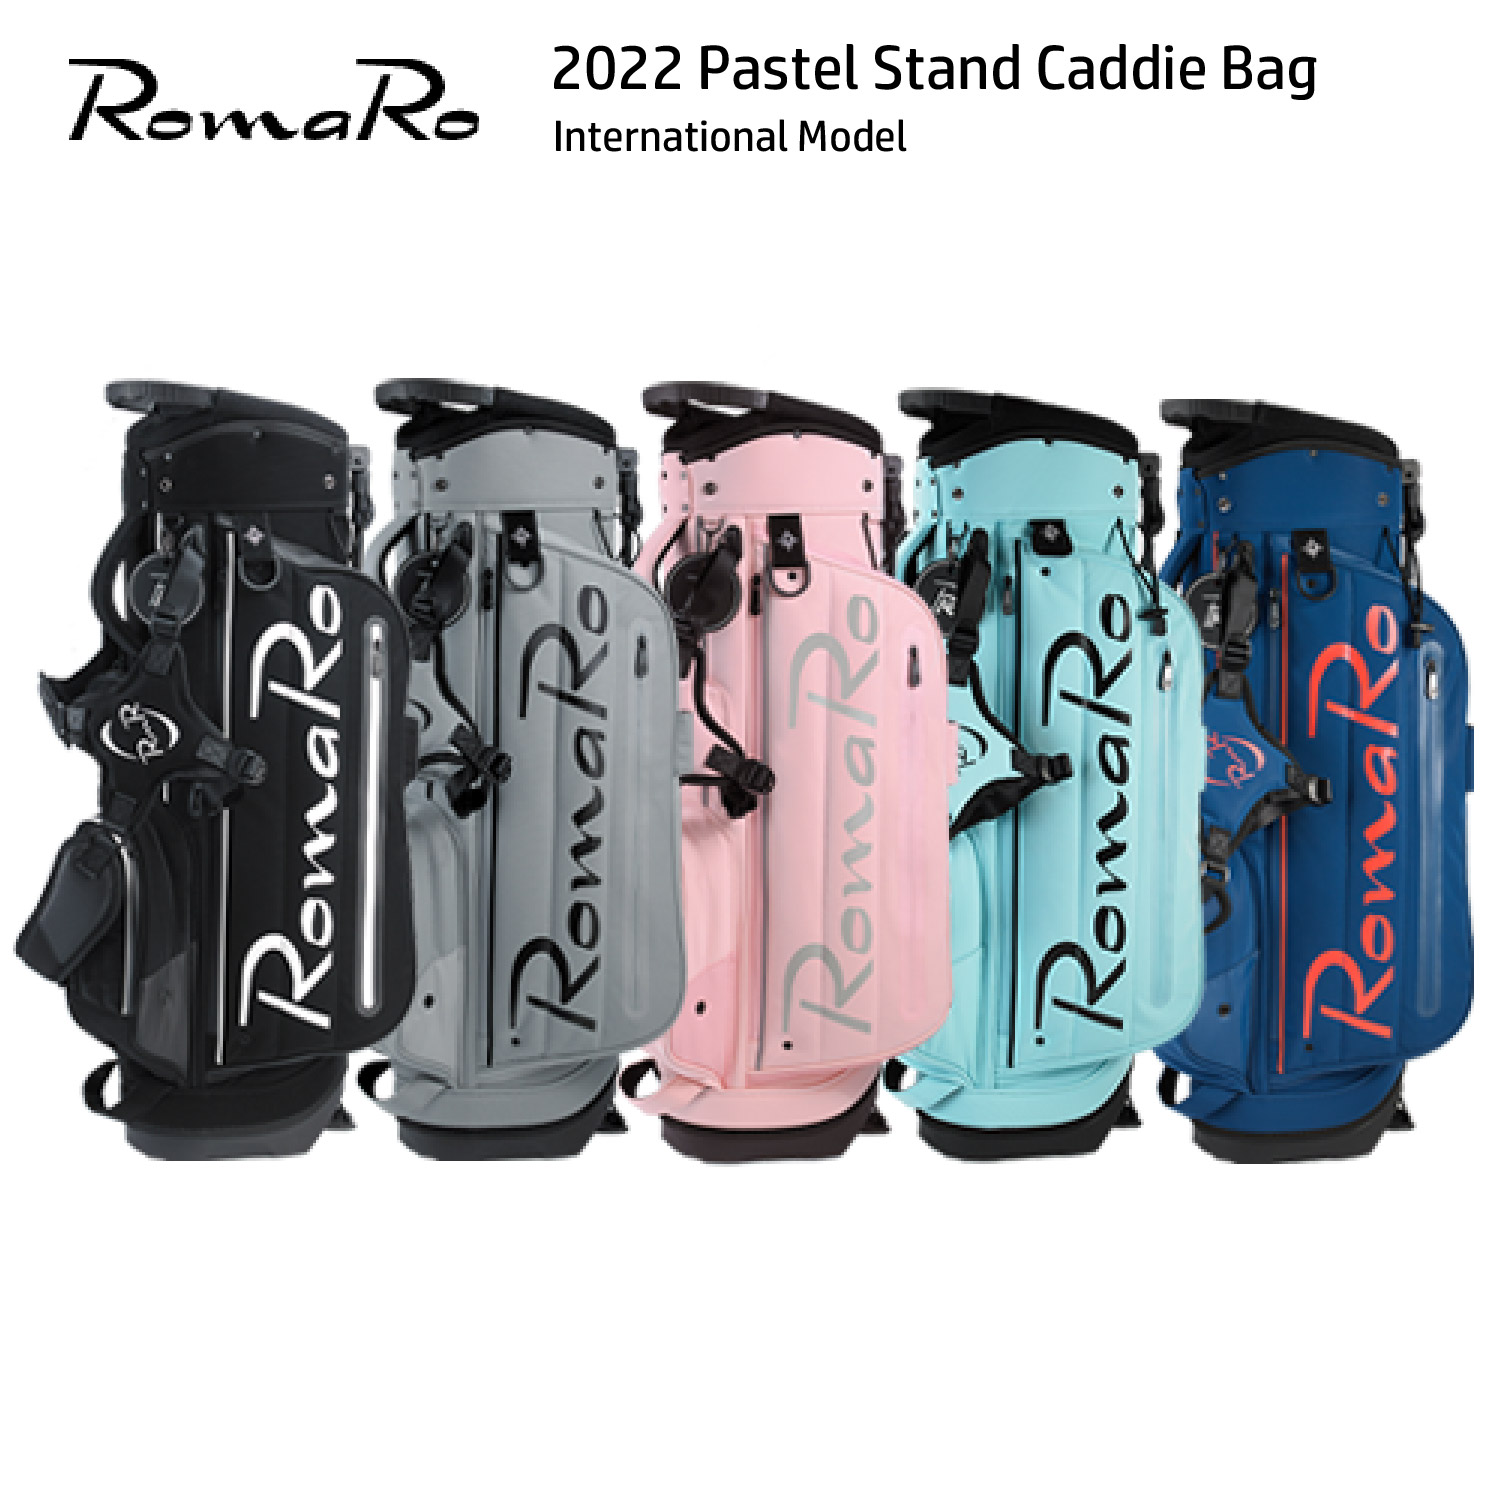 RomaRo 2022 Pastel Stand Caddie Bag International Model